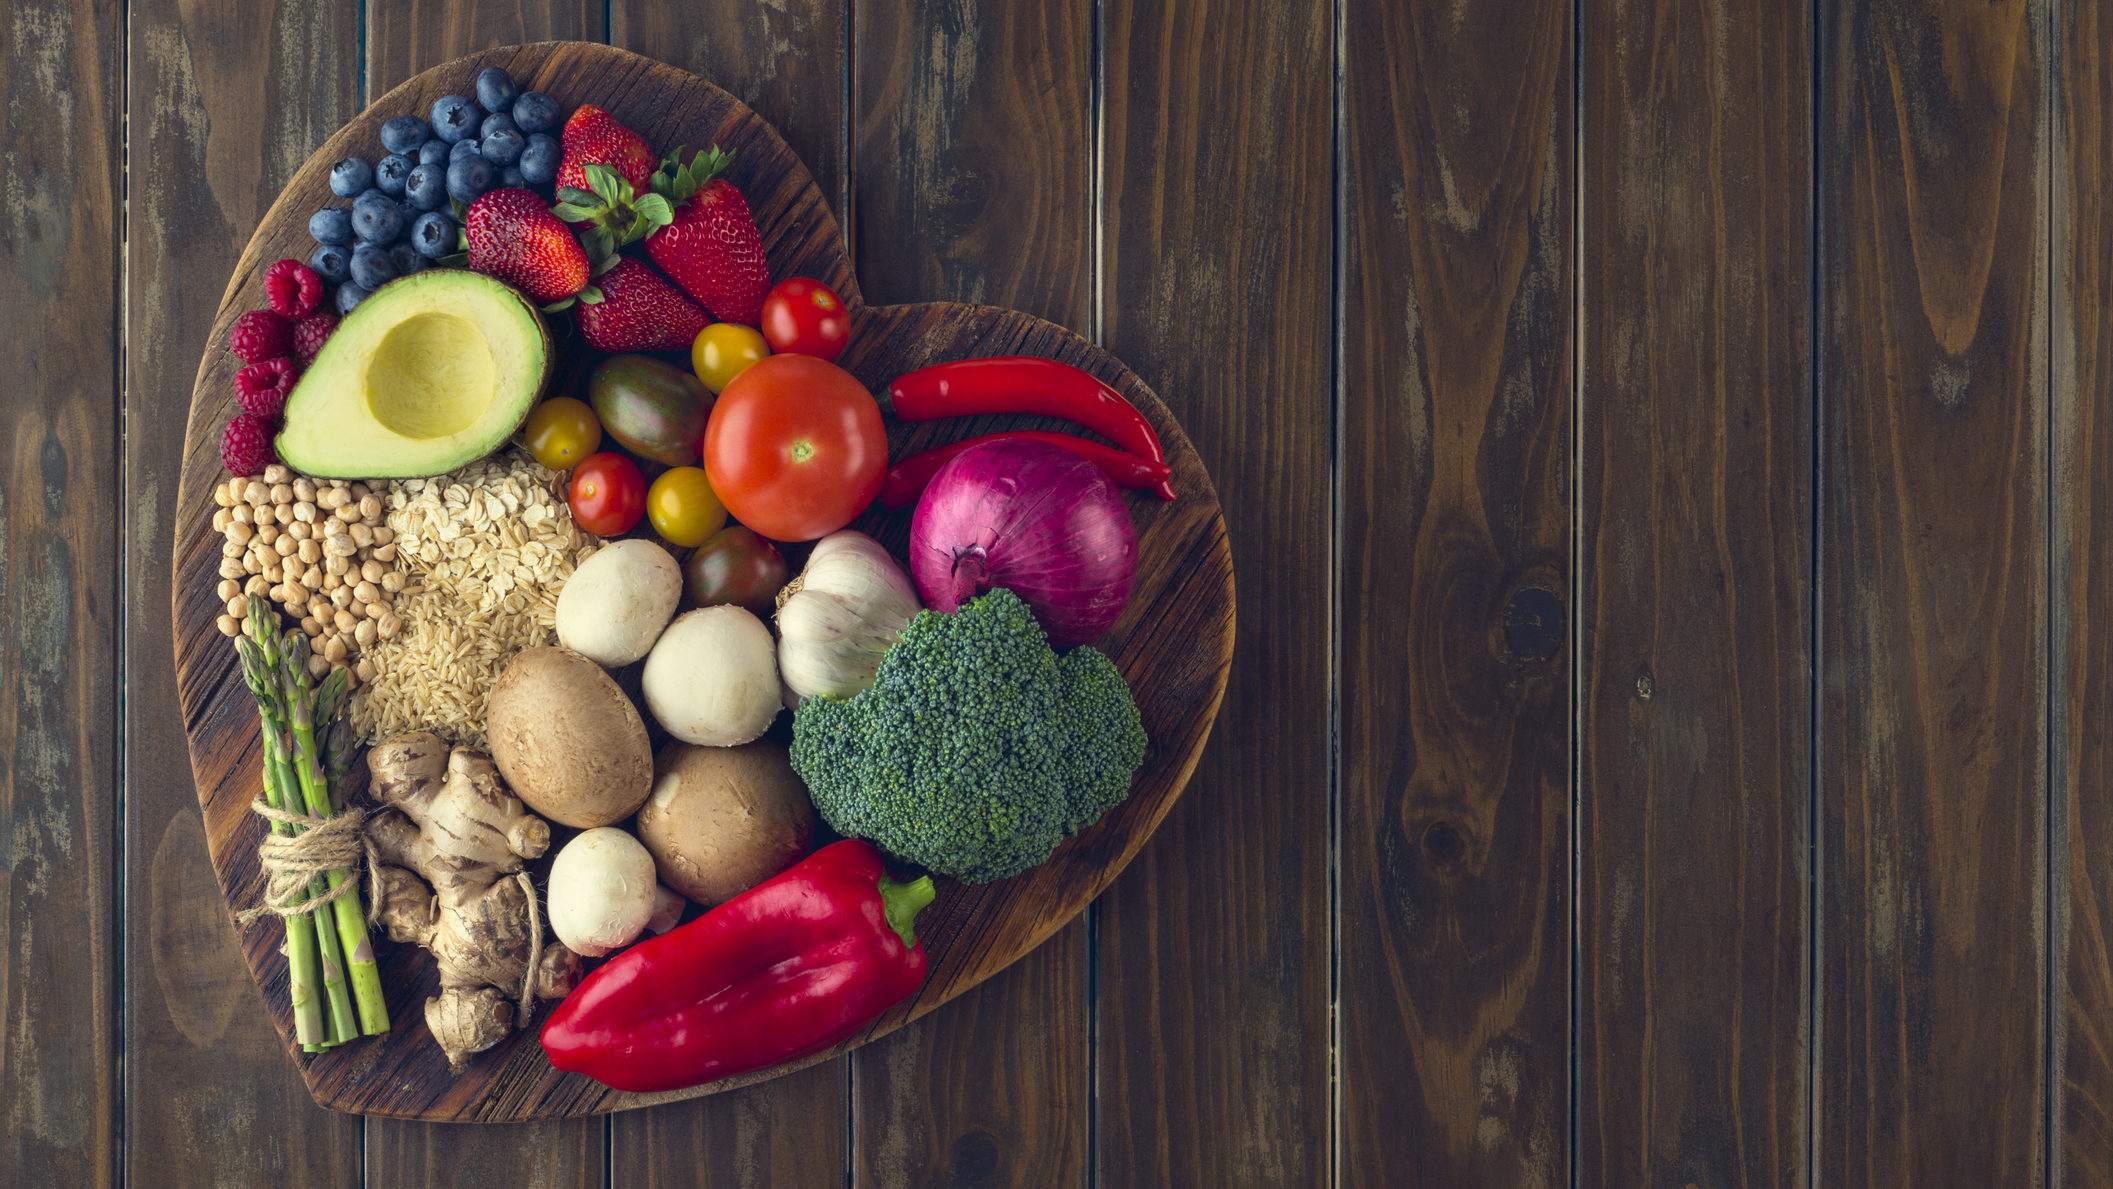 Plant-Based Foods Provide Five Health Benefits